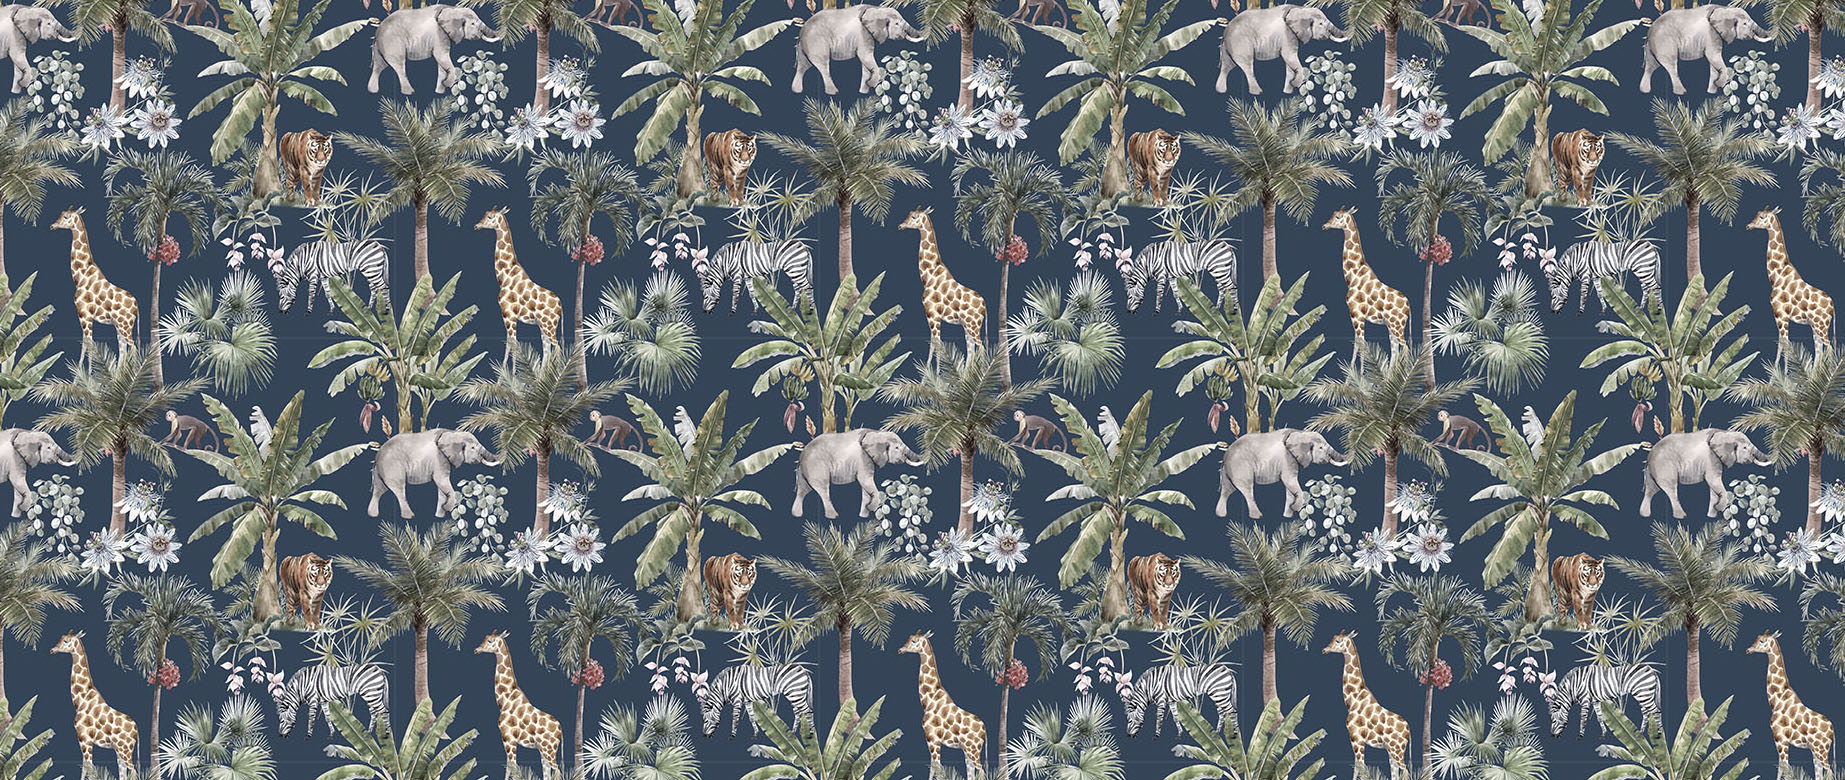 elephant-tiger-giraffe-trees-wallpaper-seamless-repeat-view